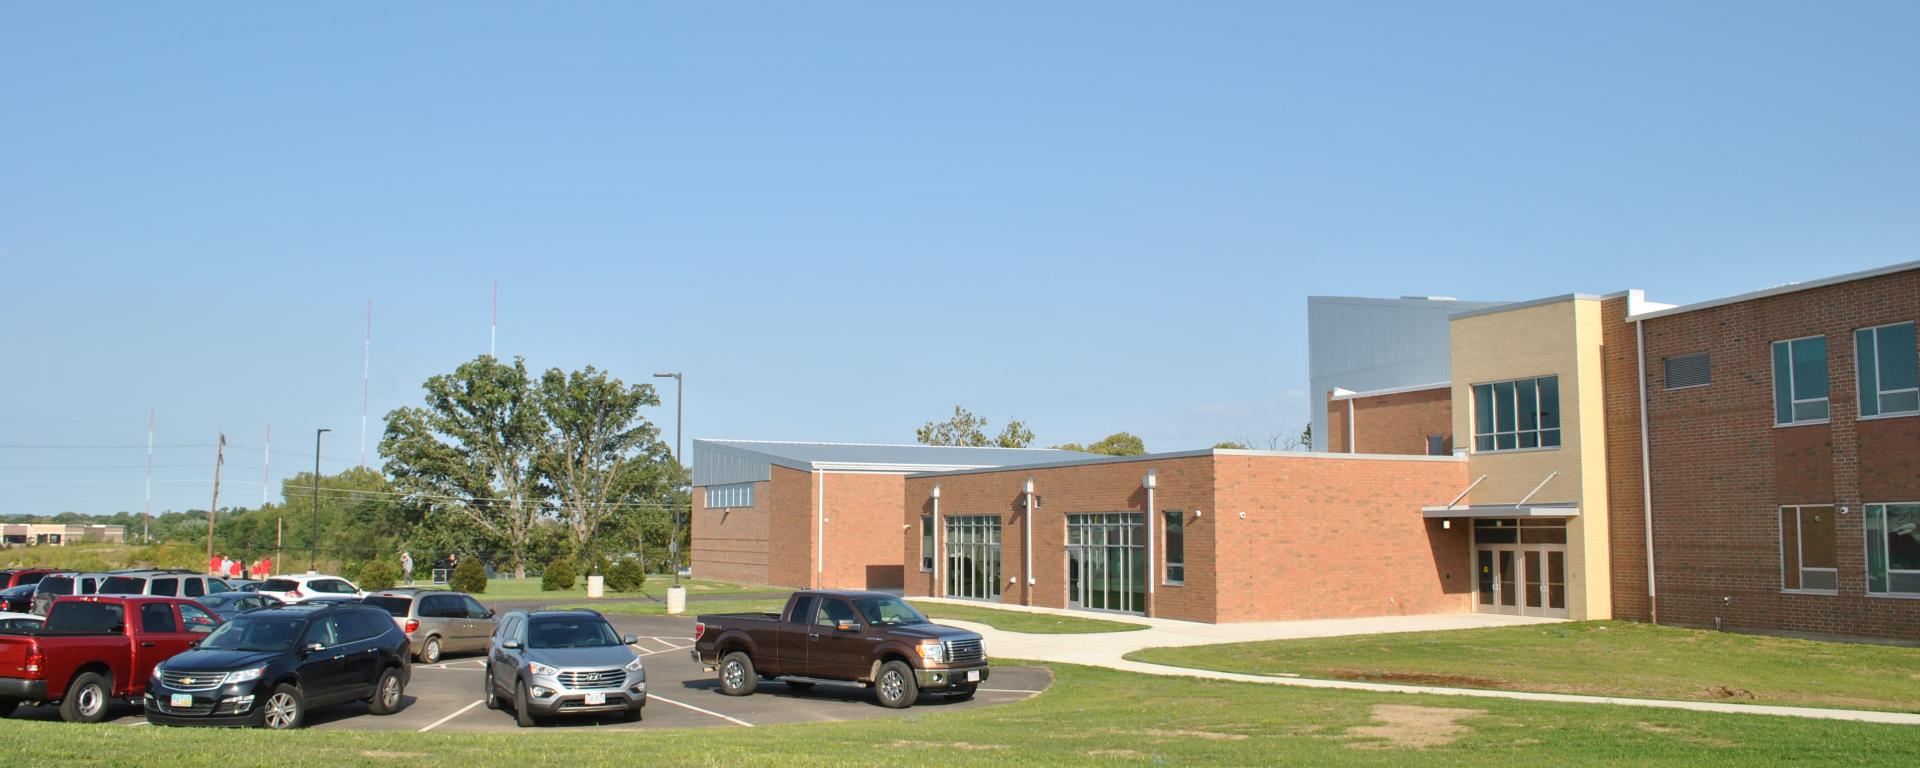 side profile of school building